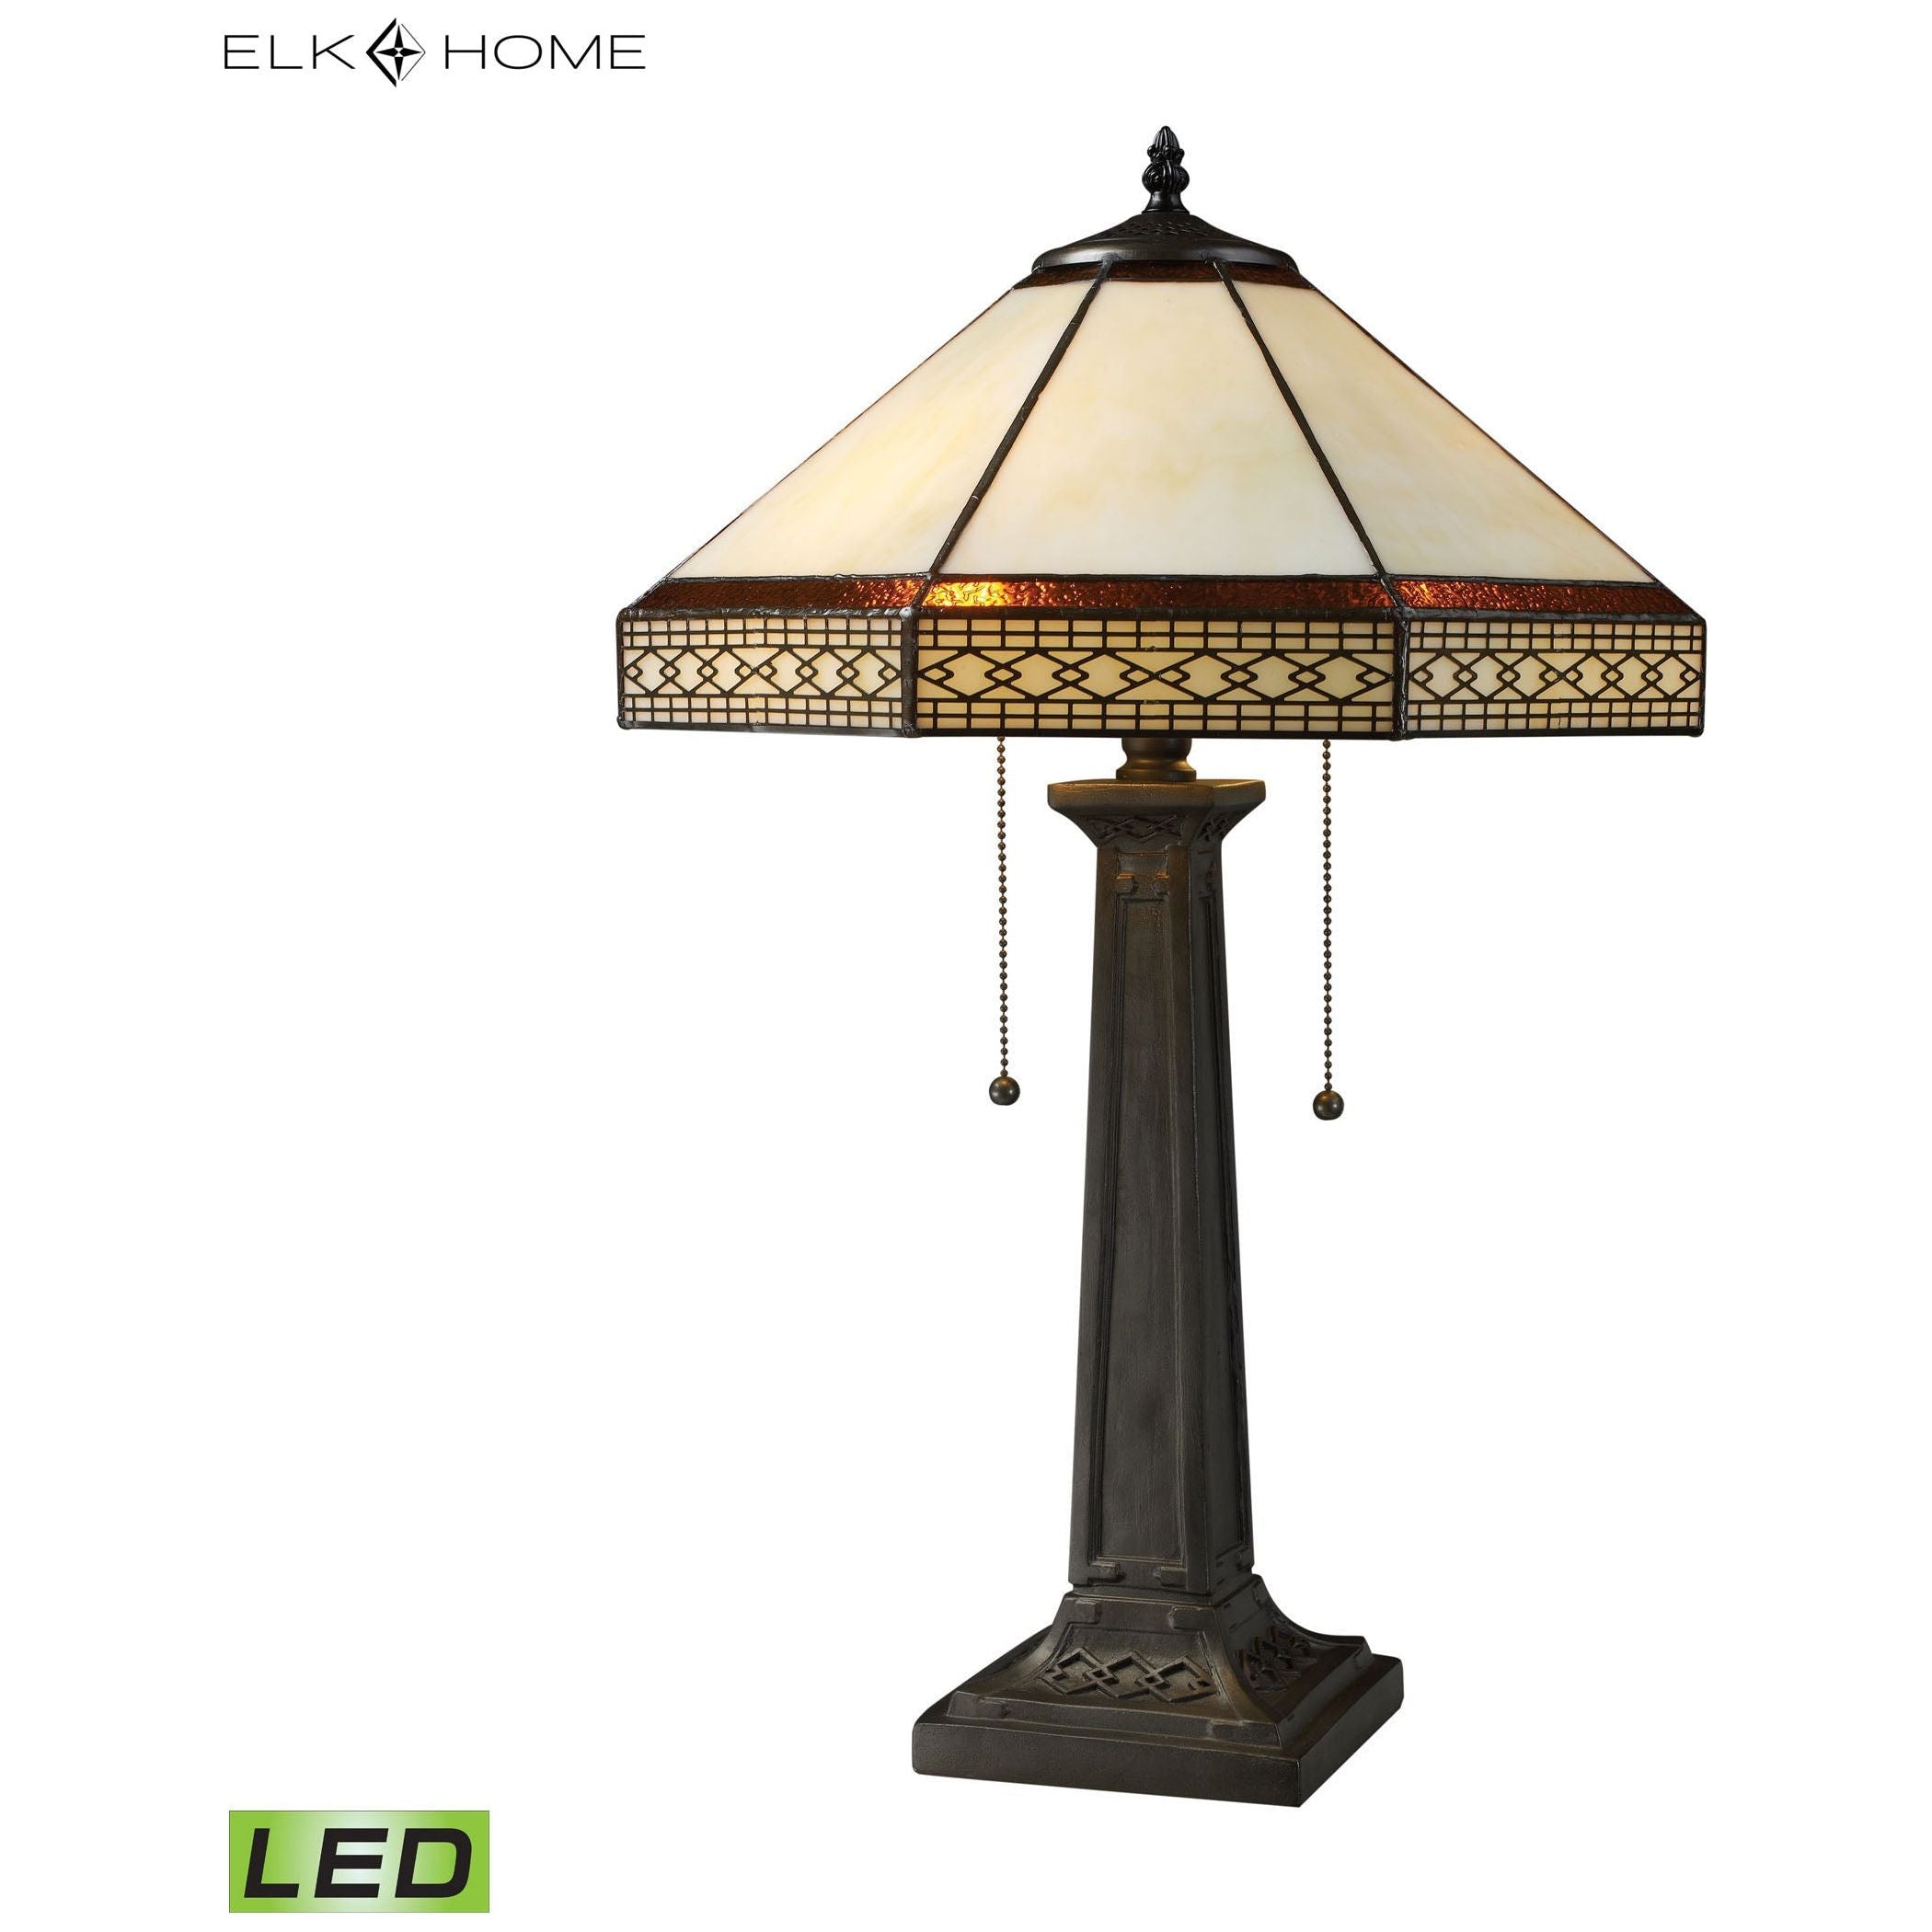 Stone Filigree 24" High 2-Light Table Lamp